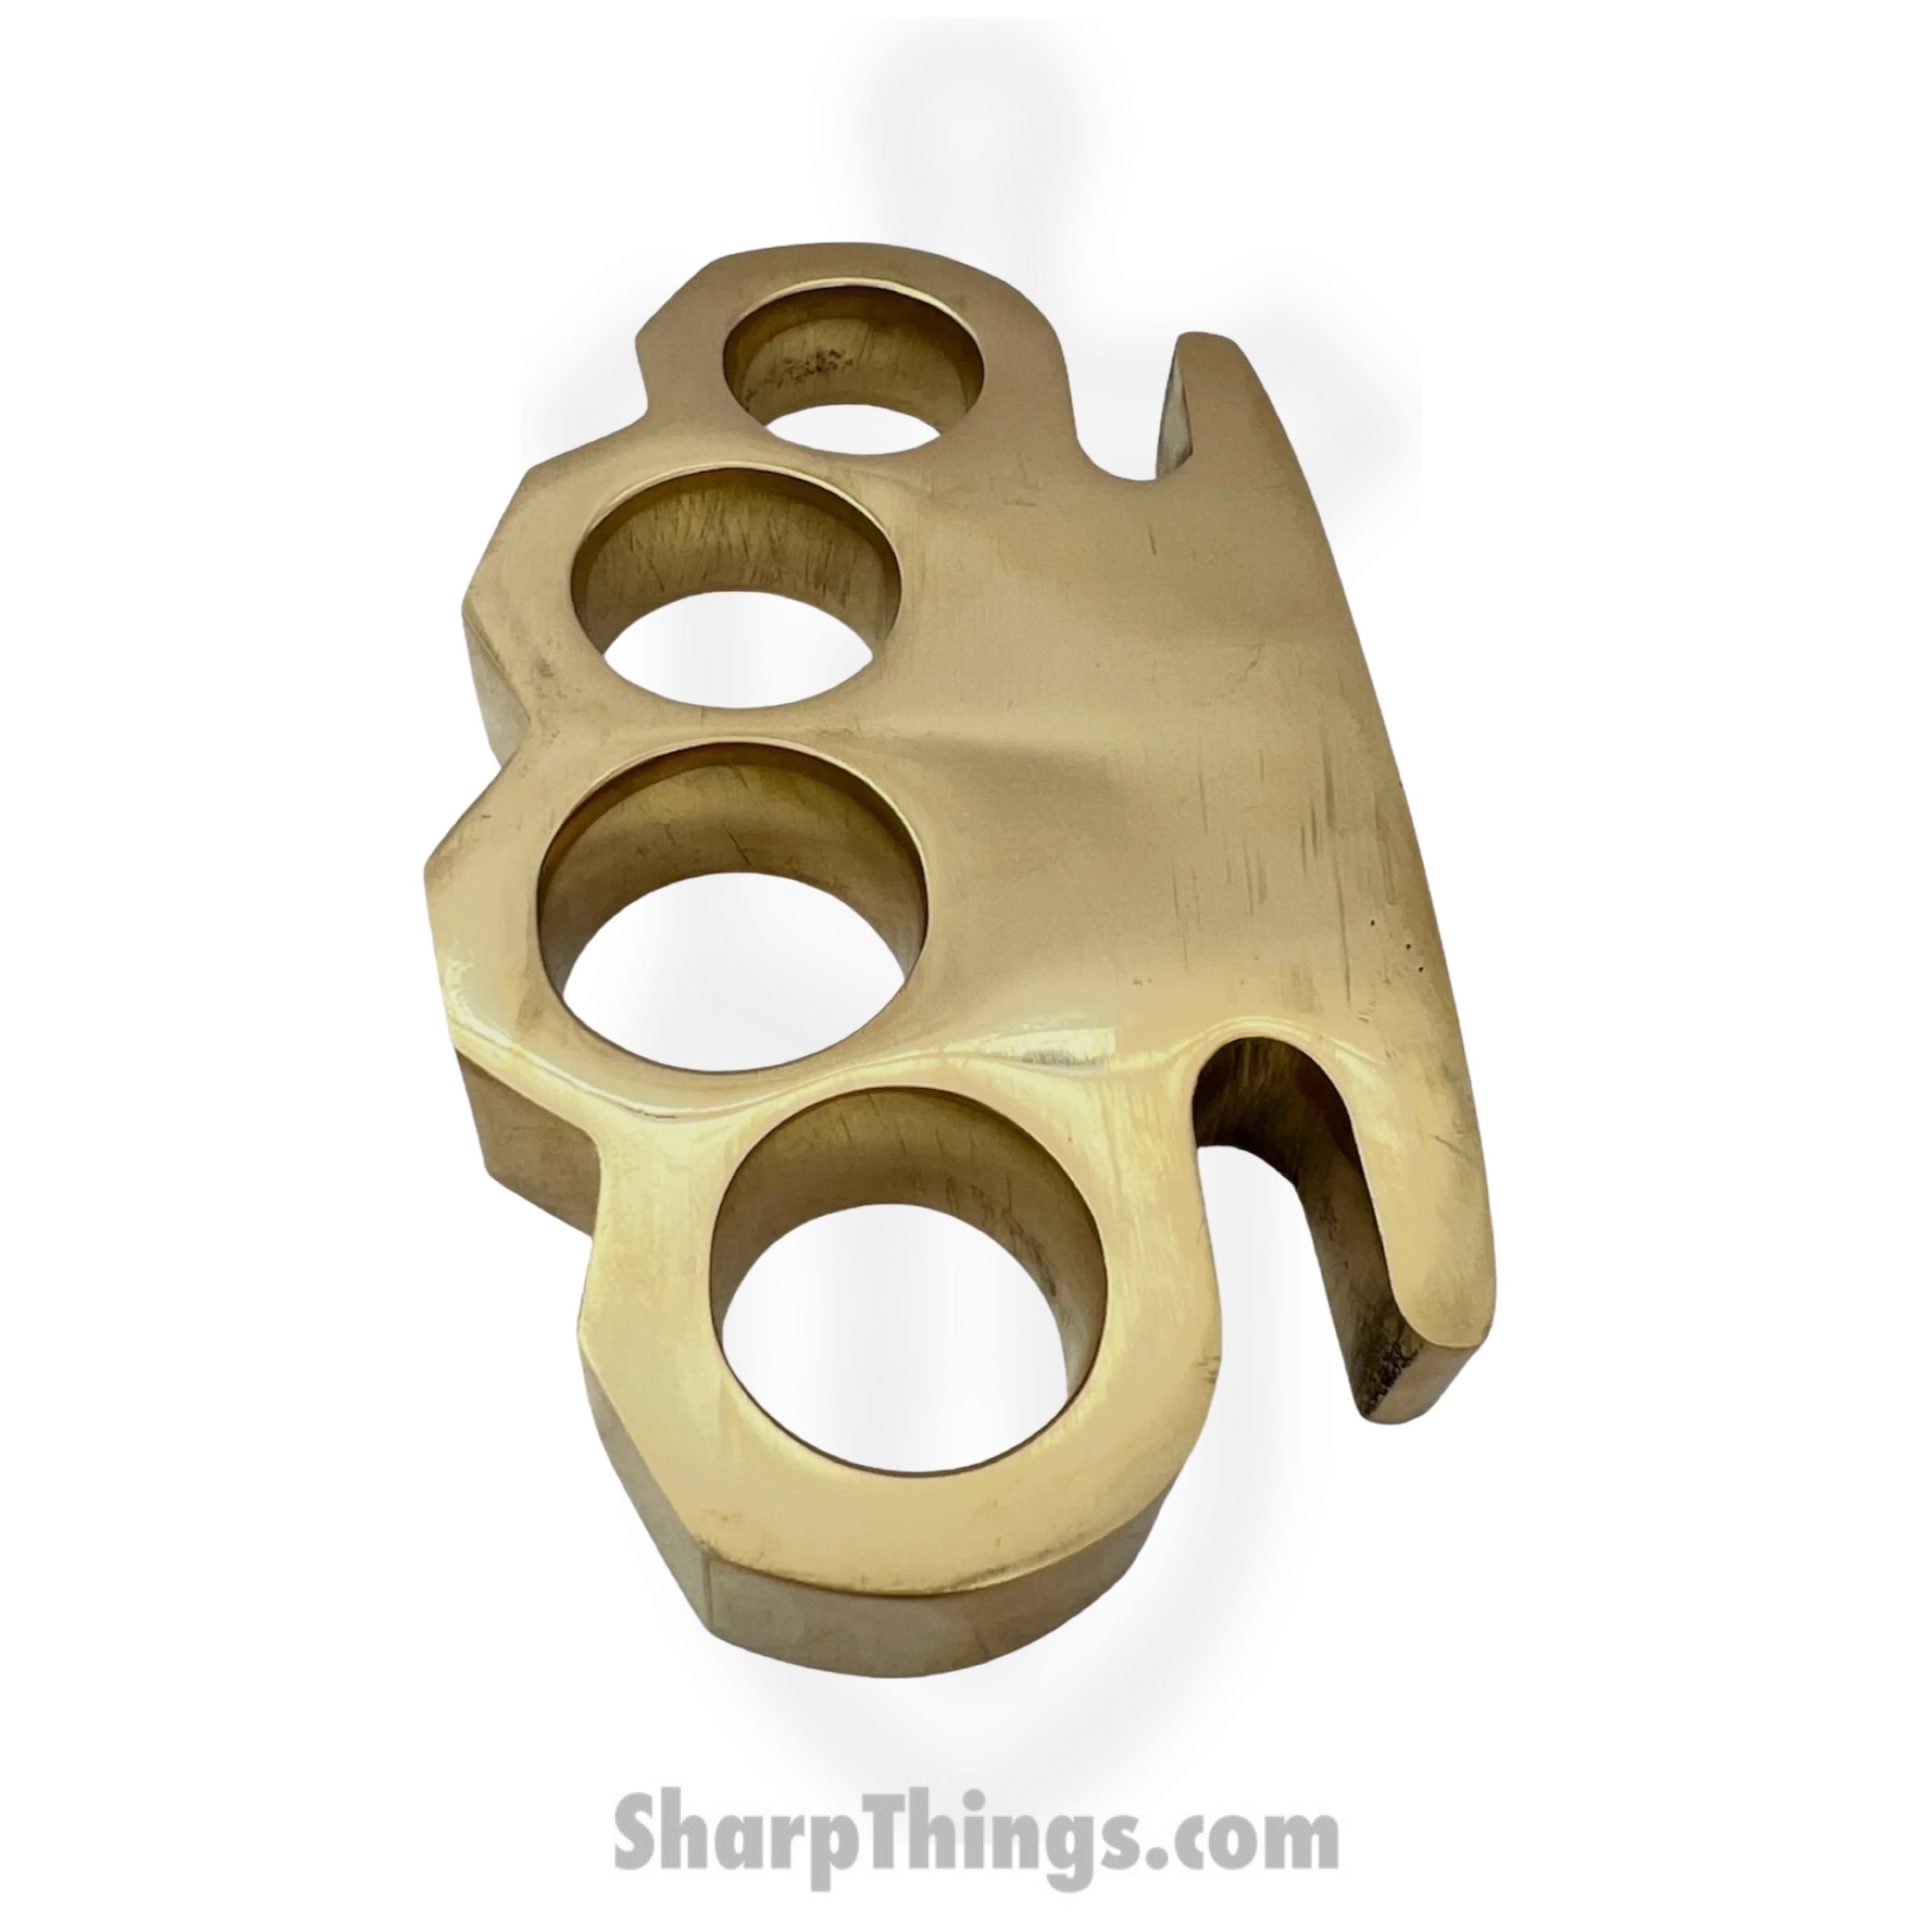 Brass knuckles. | Glock Forum